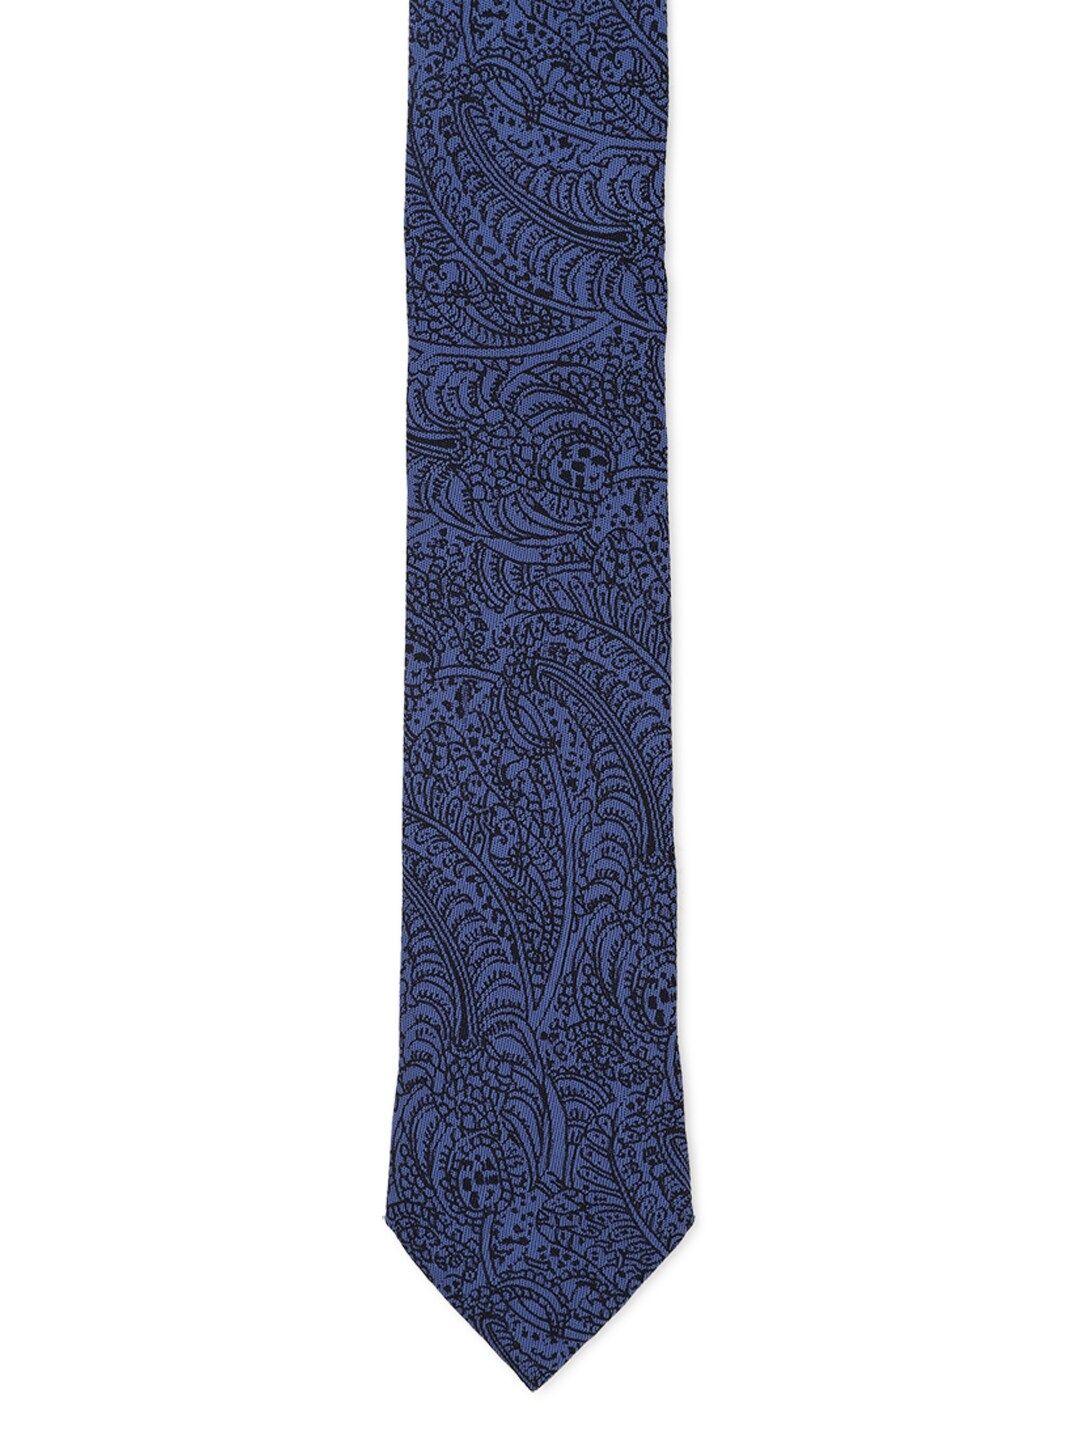 louis philippe men navy blue printed ascot tie